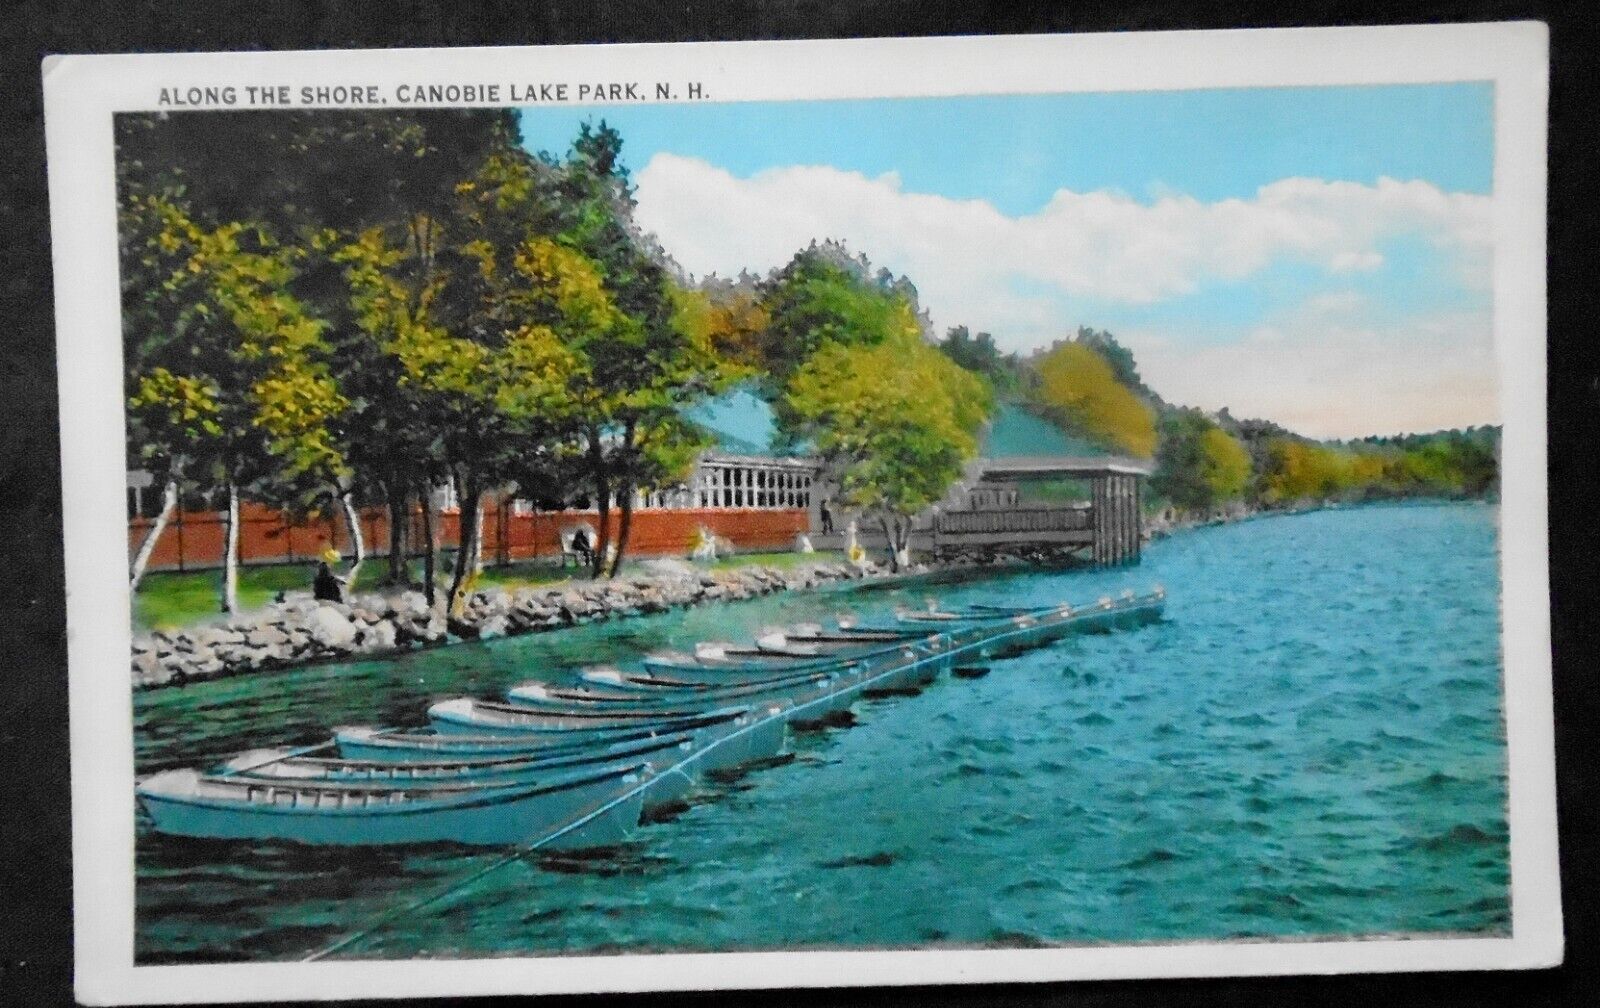 Salem, NH, Canobie Lake Park, Along the Shore, line of boats, circa 1920